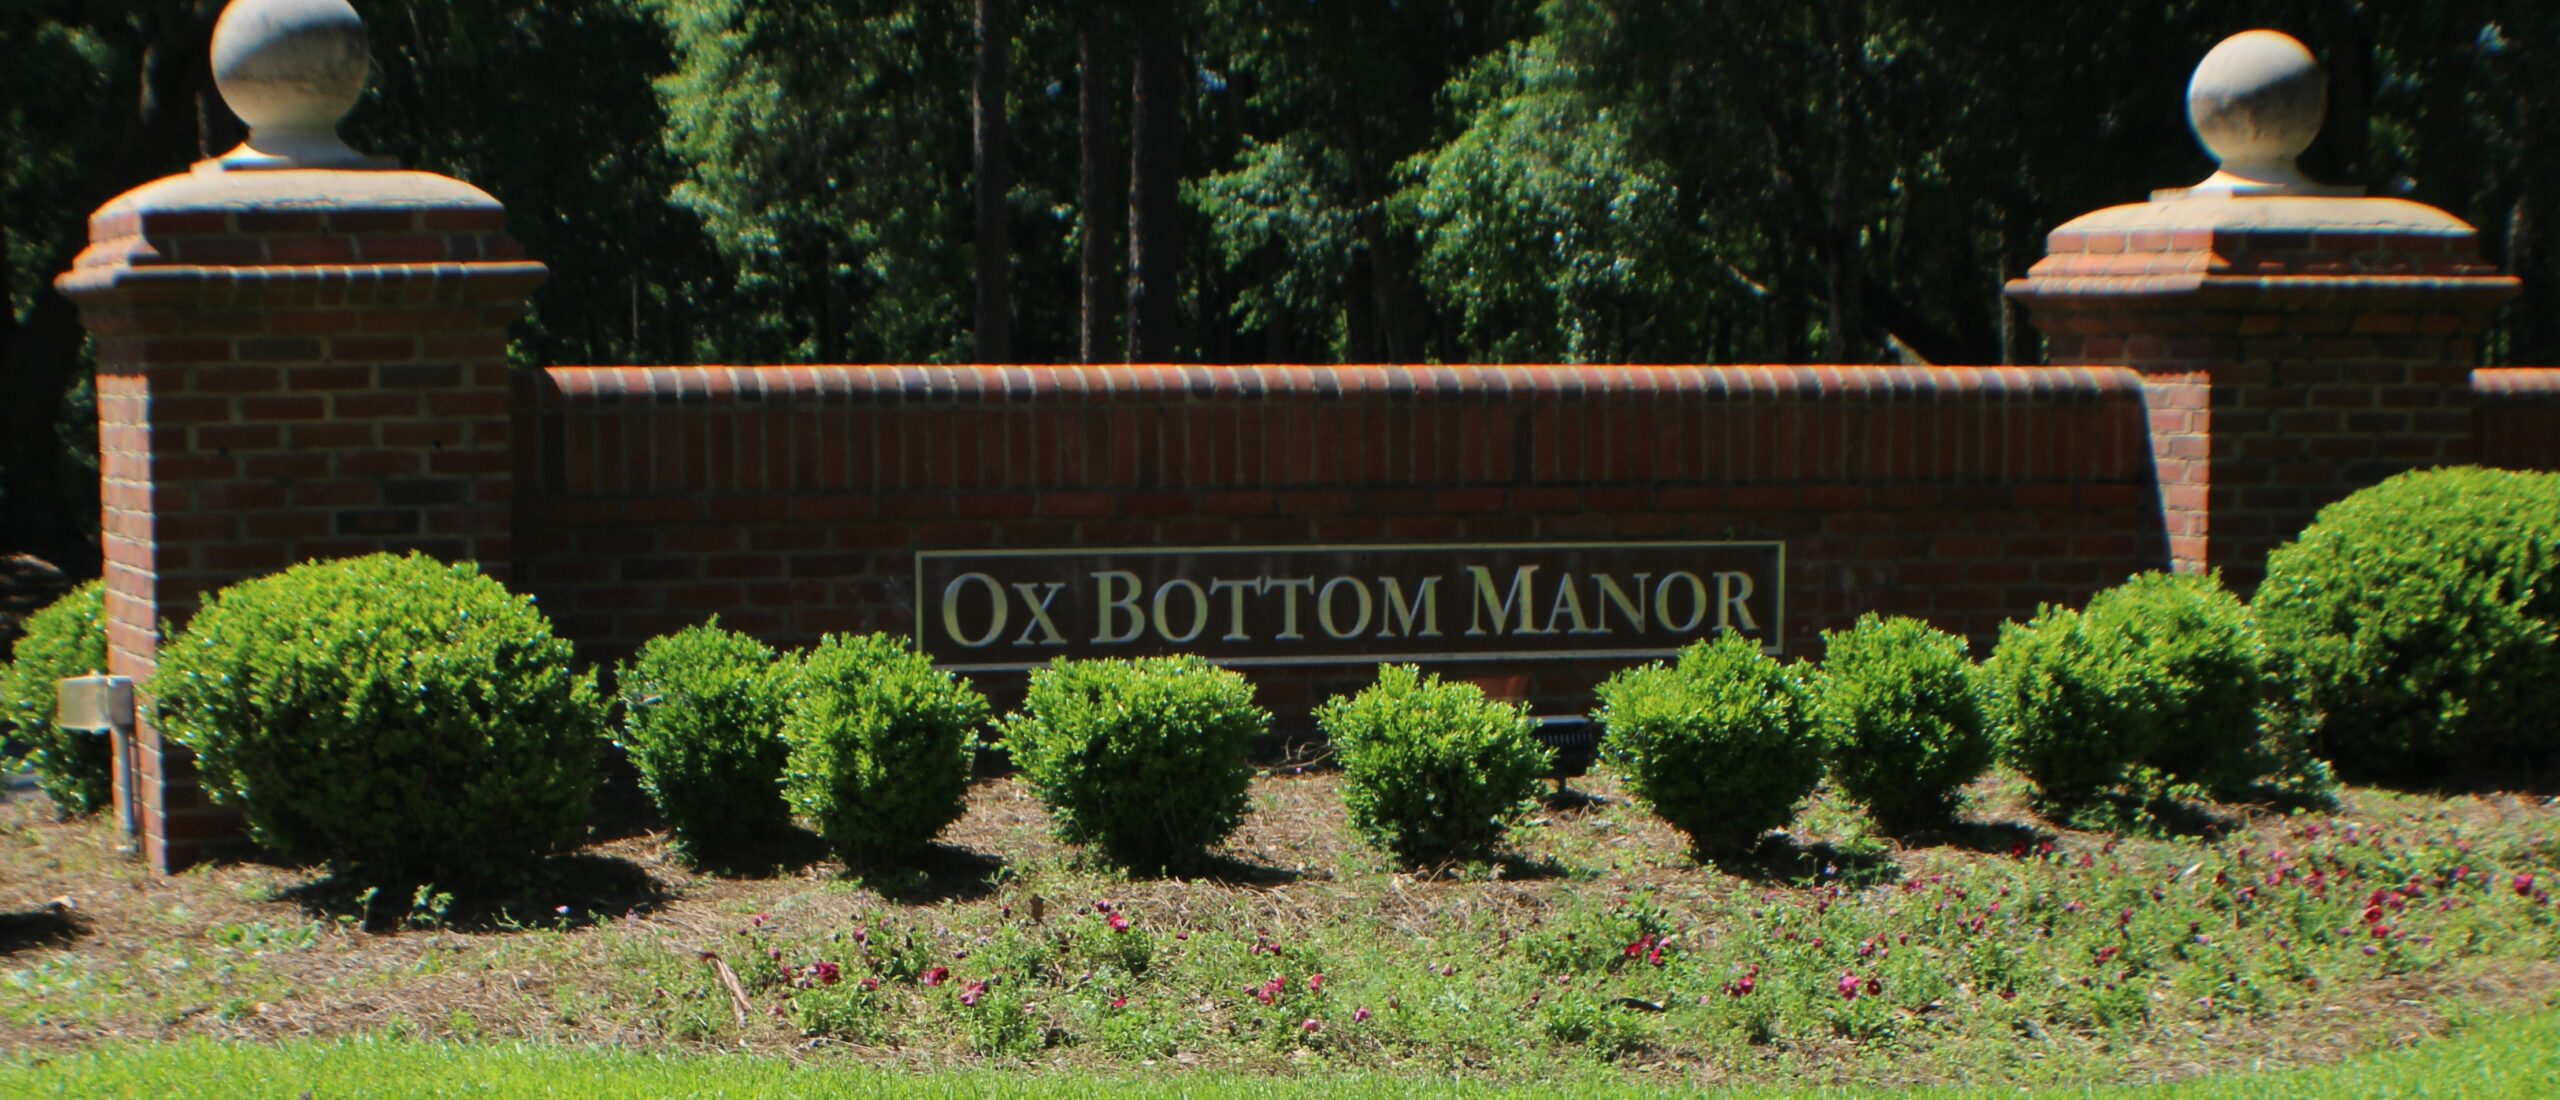 Ox Bottom Manor in Tallahassee Florida